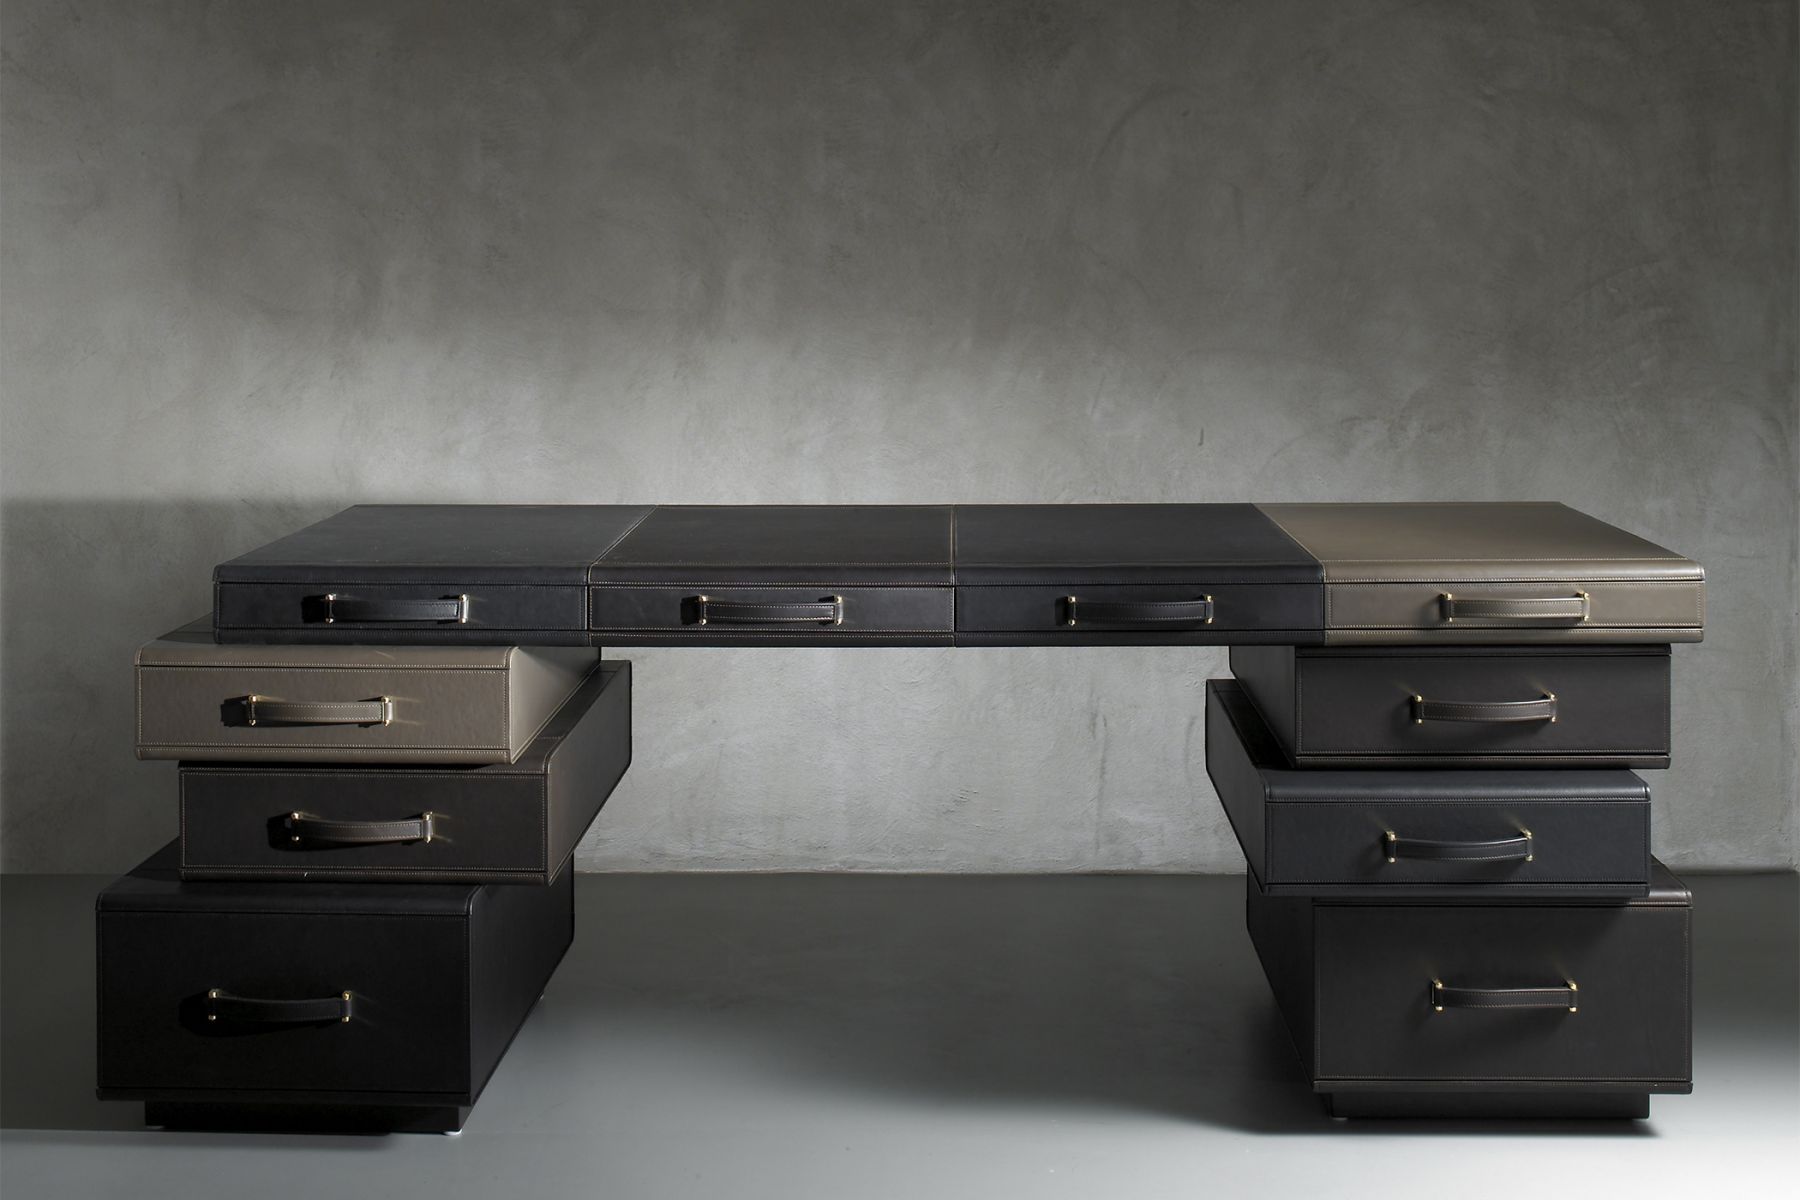 Scrivania 'Desk of briefcases' Maarten De Ceulaer pic-7